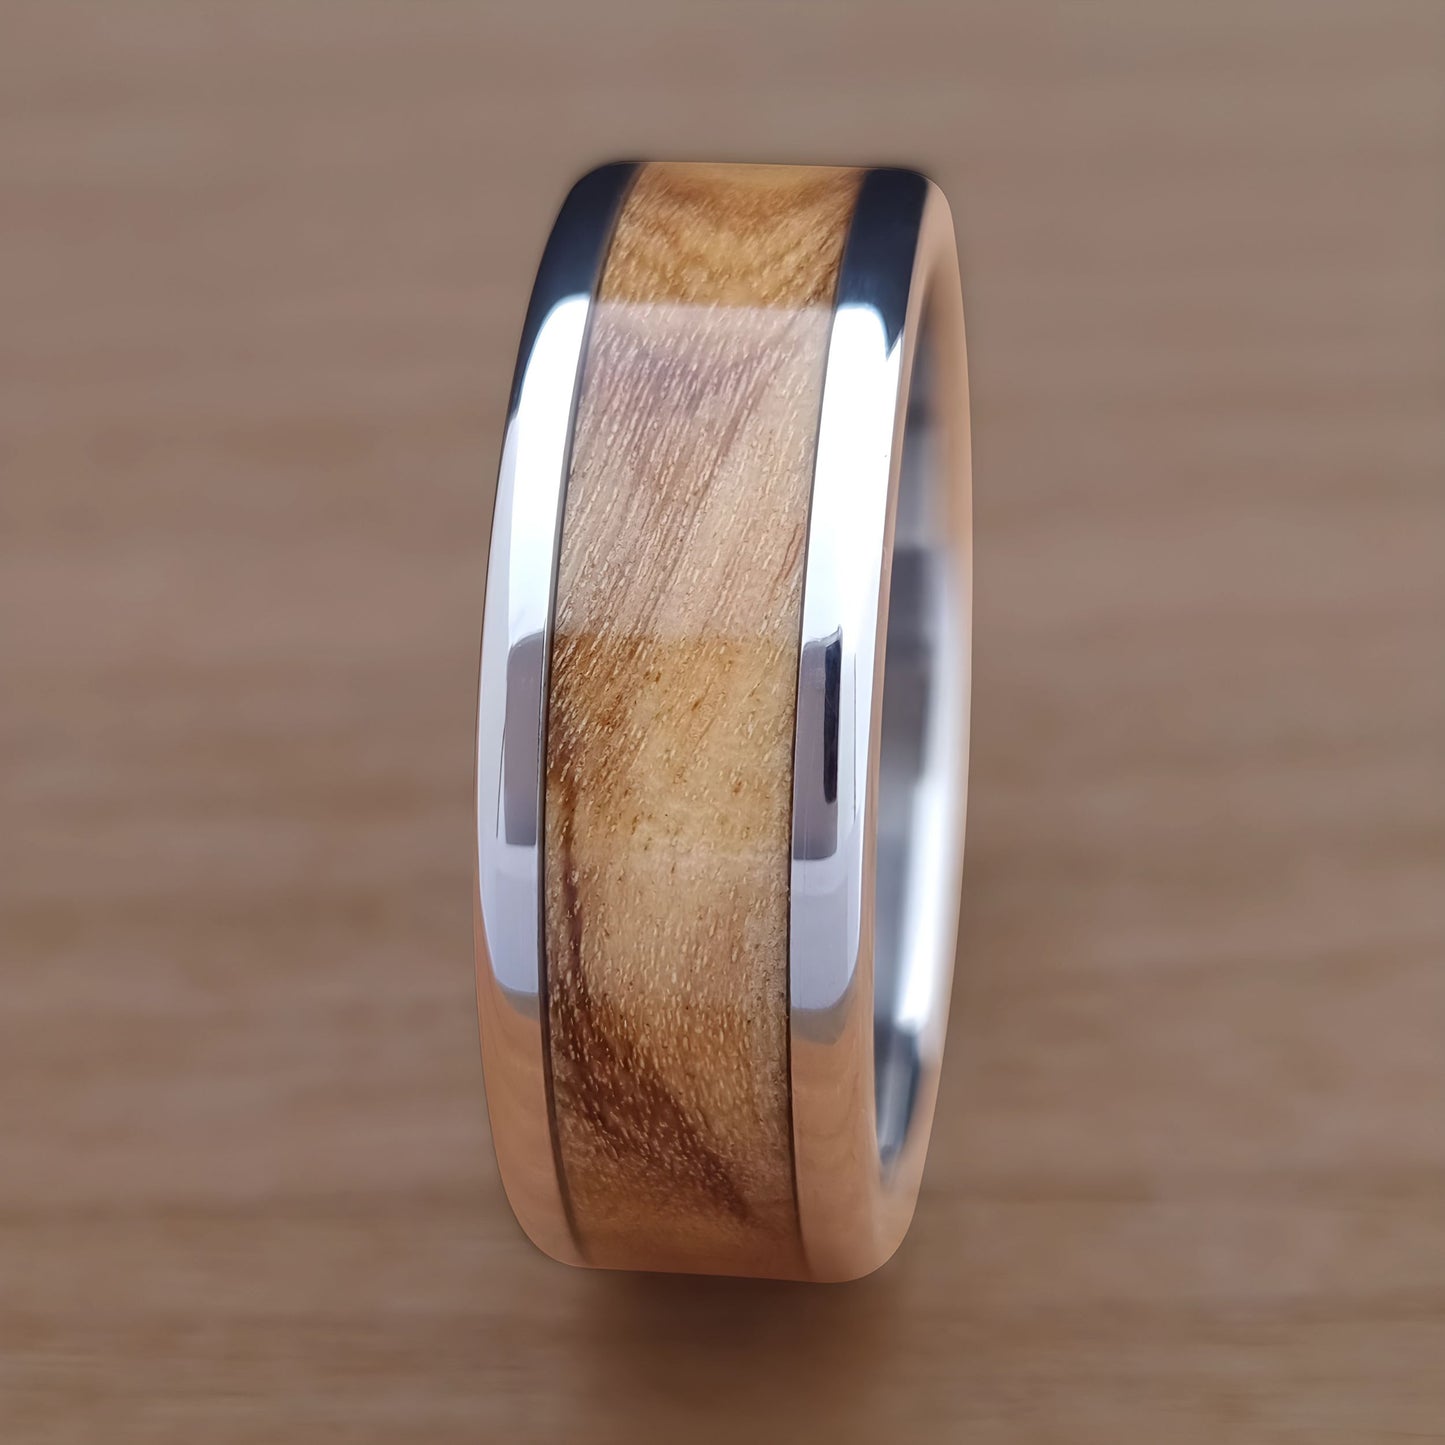 Wood Inlay Ring - Ironwood